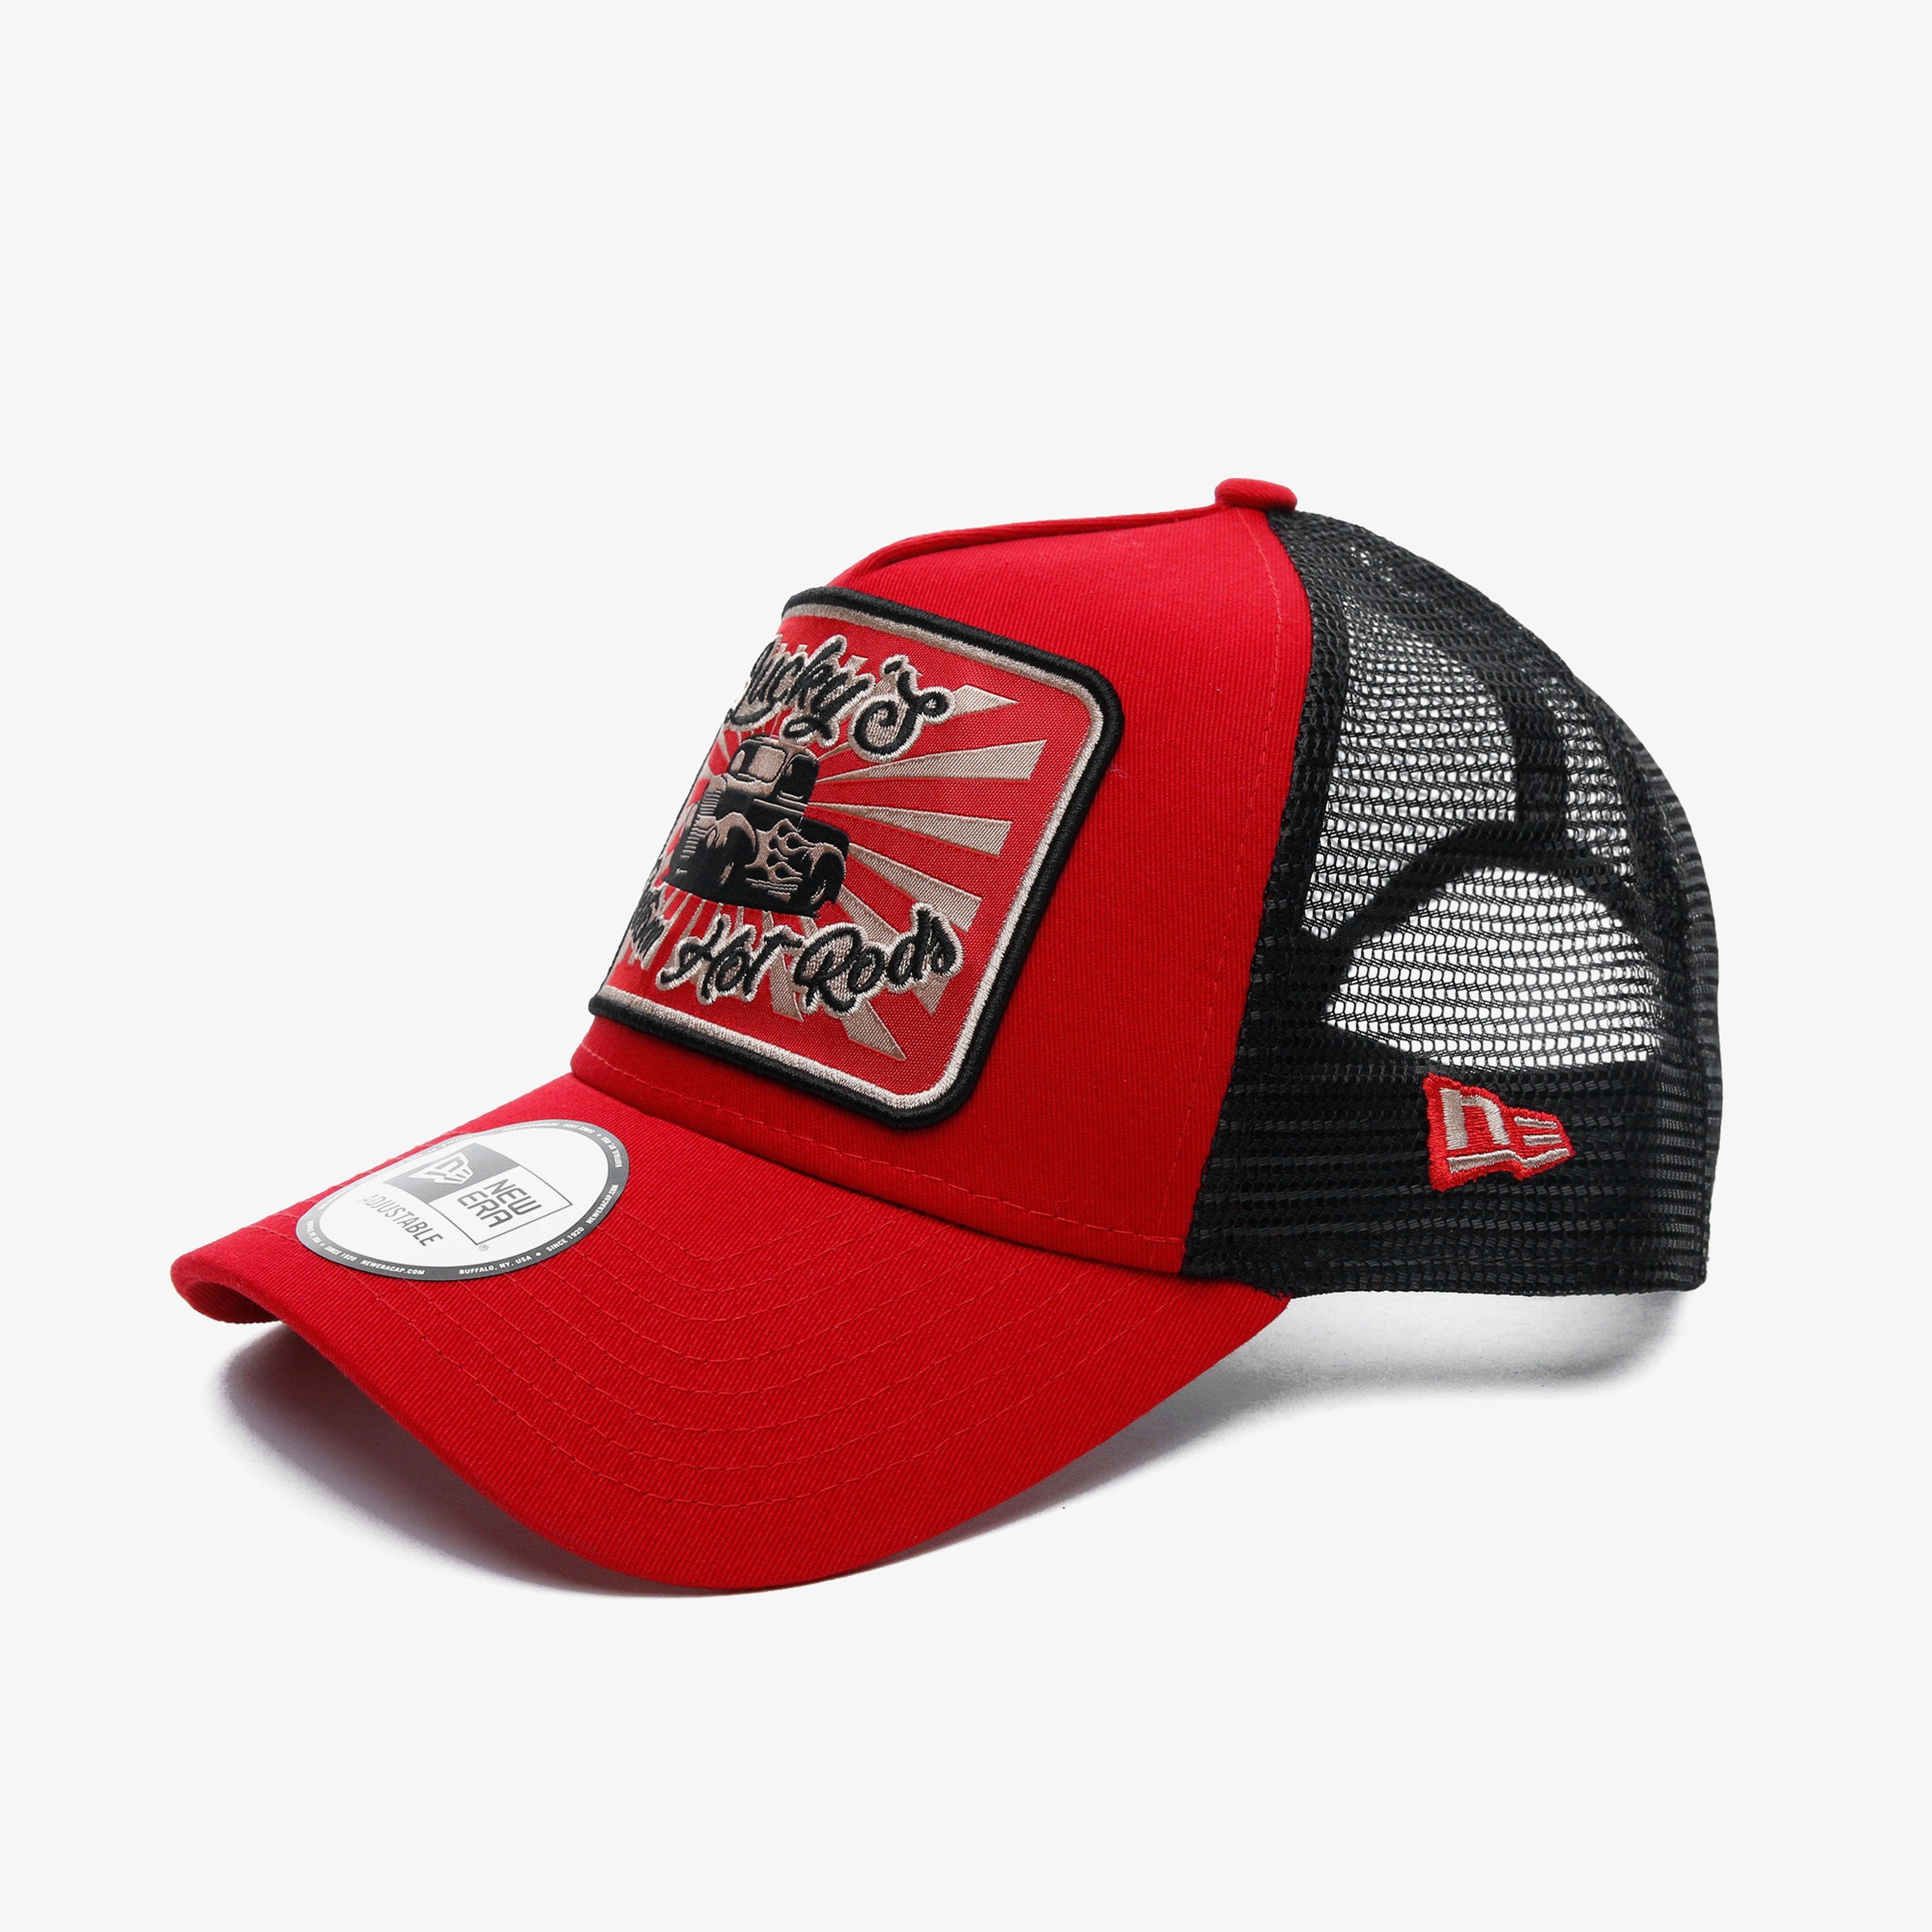 New Era Çocuk Kırmızı Şapka